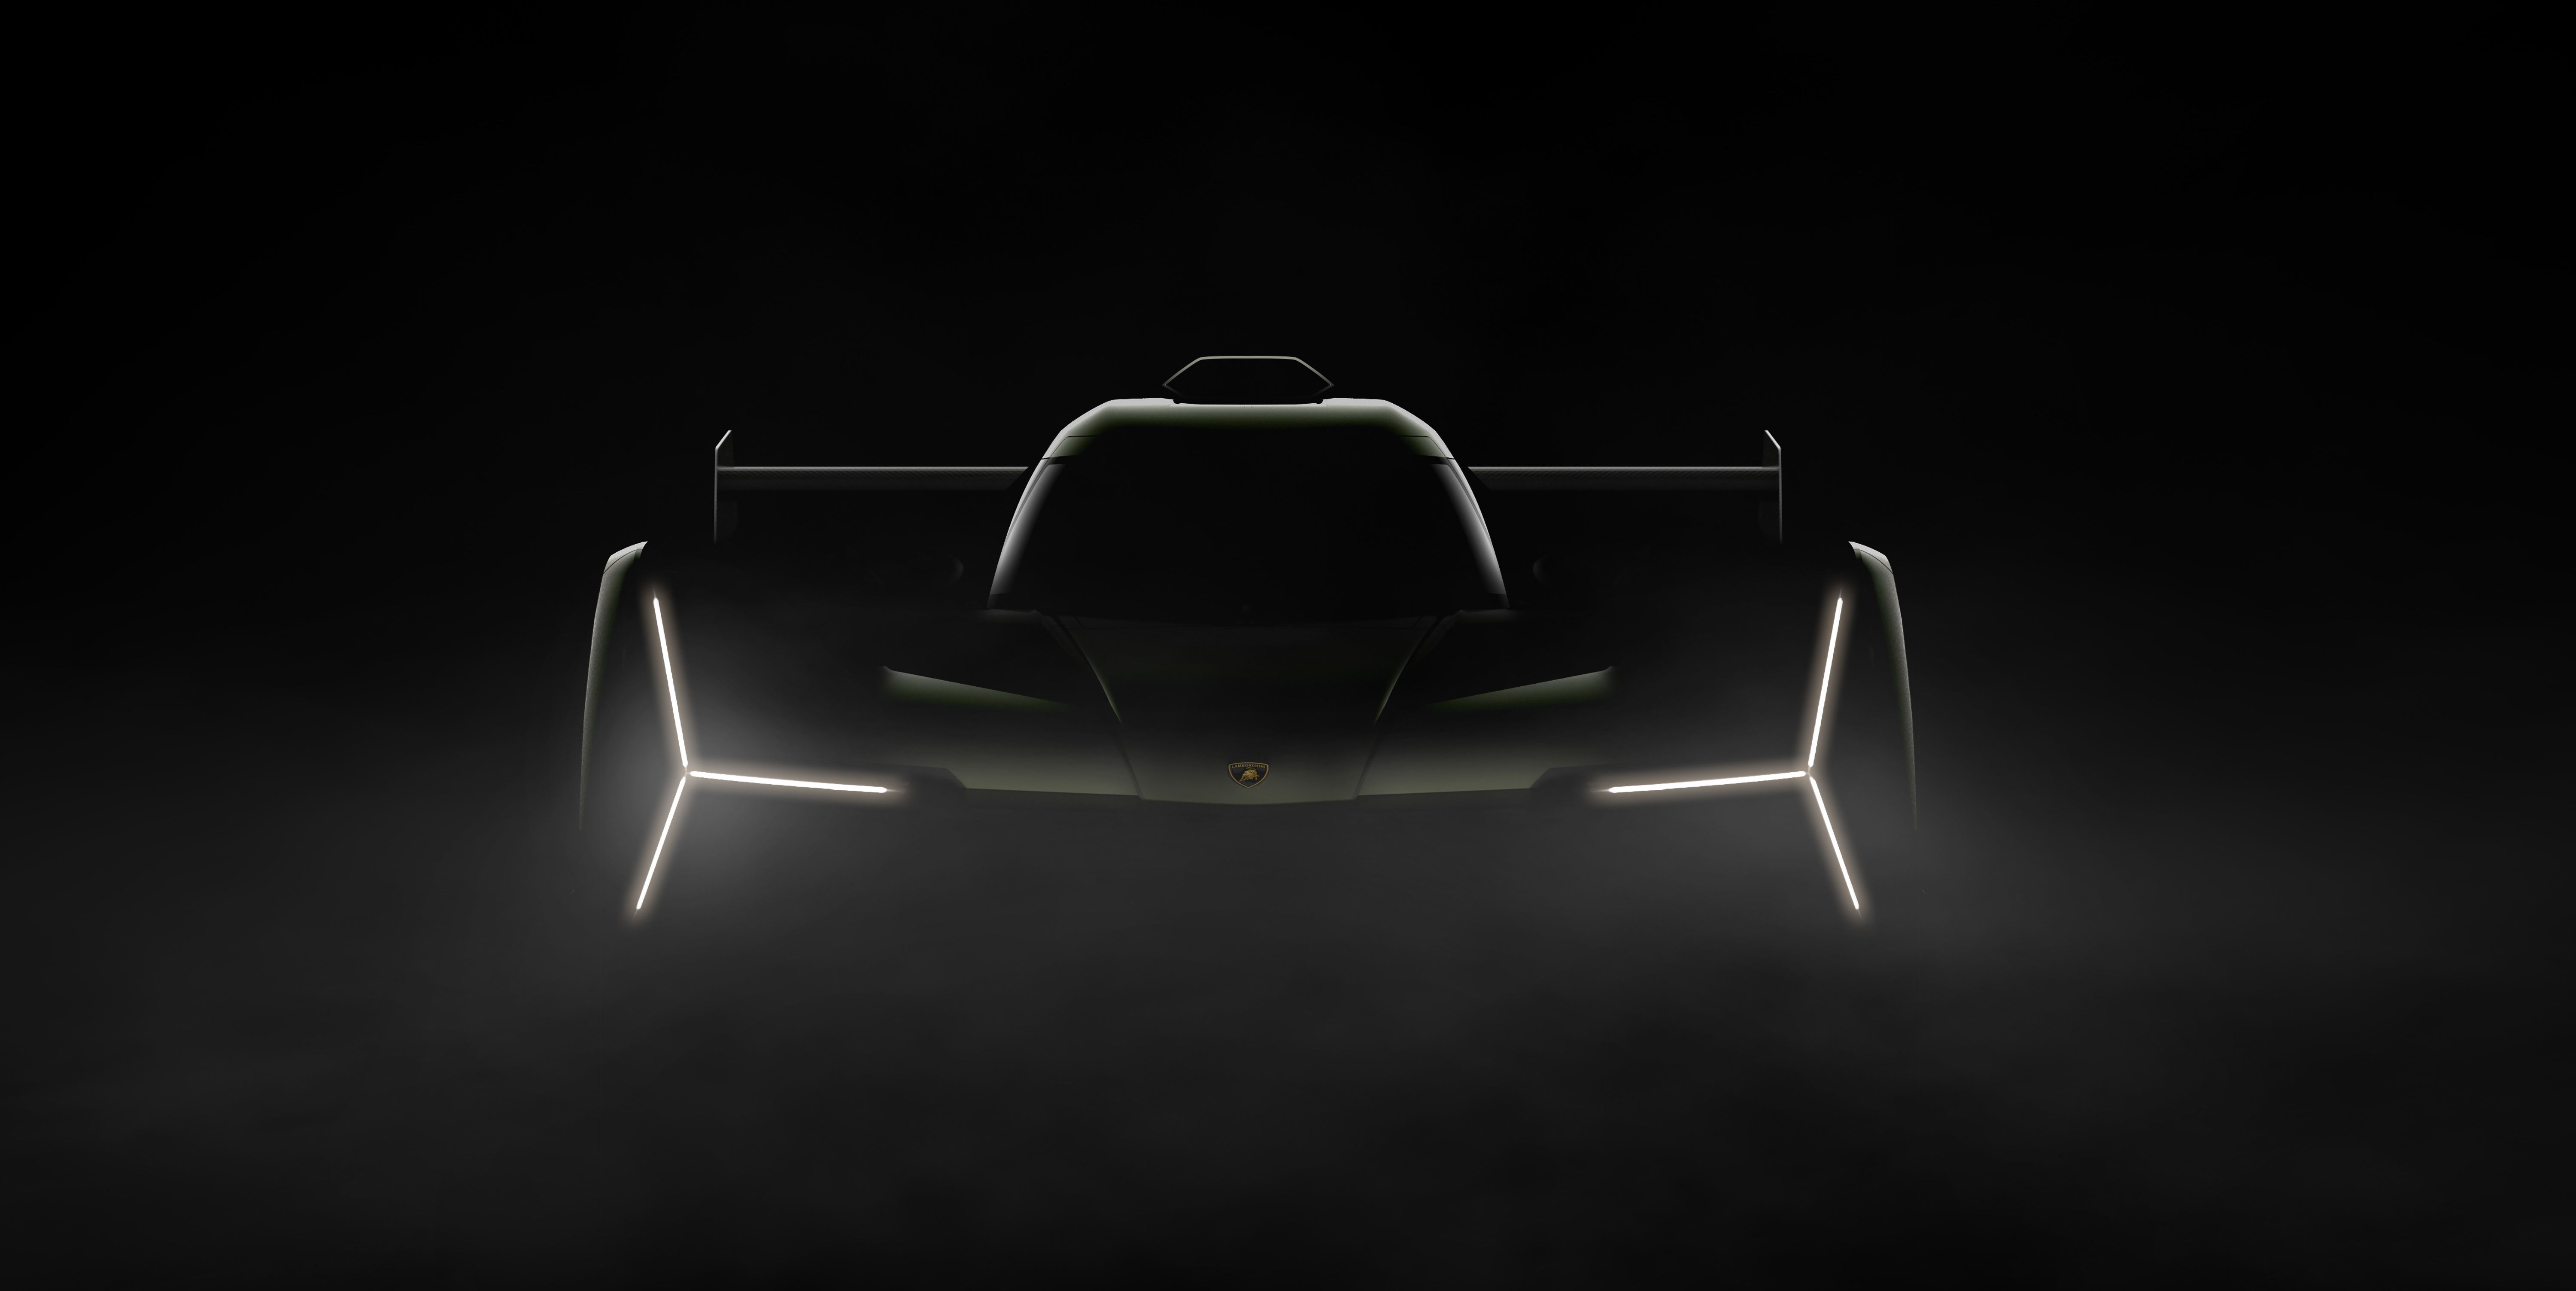 Lamborghini's Le Mans Racer Will Use a Twin Turbo V-8